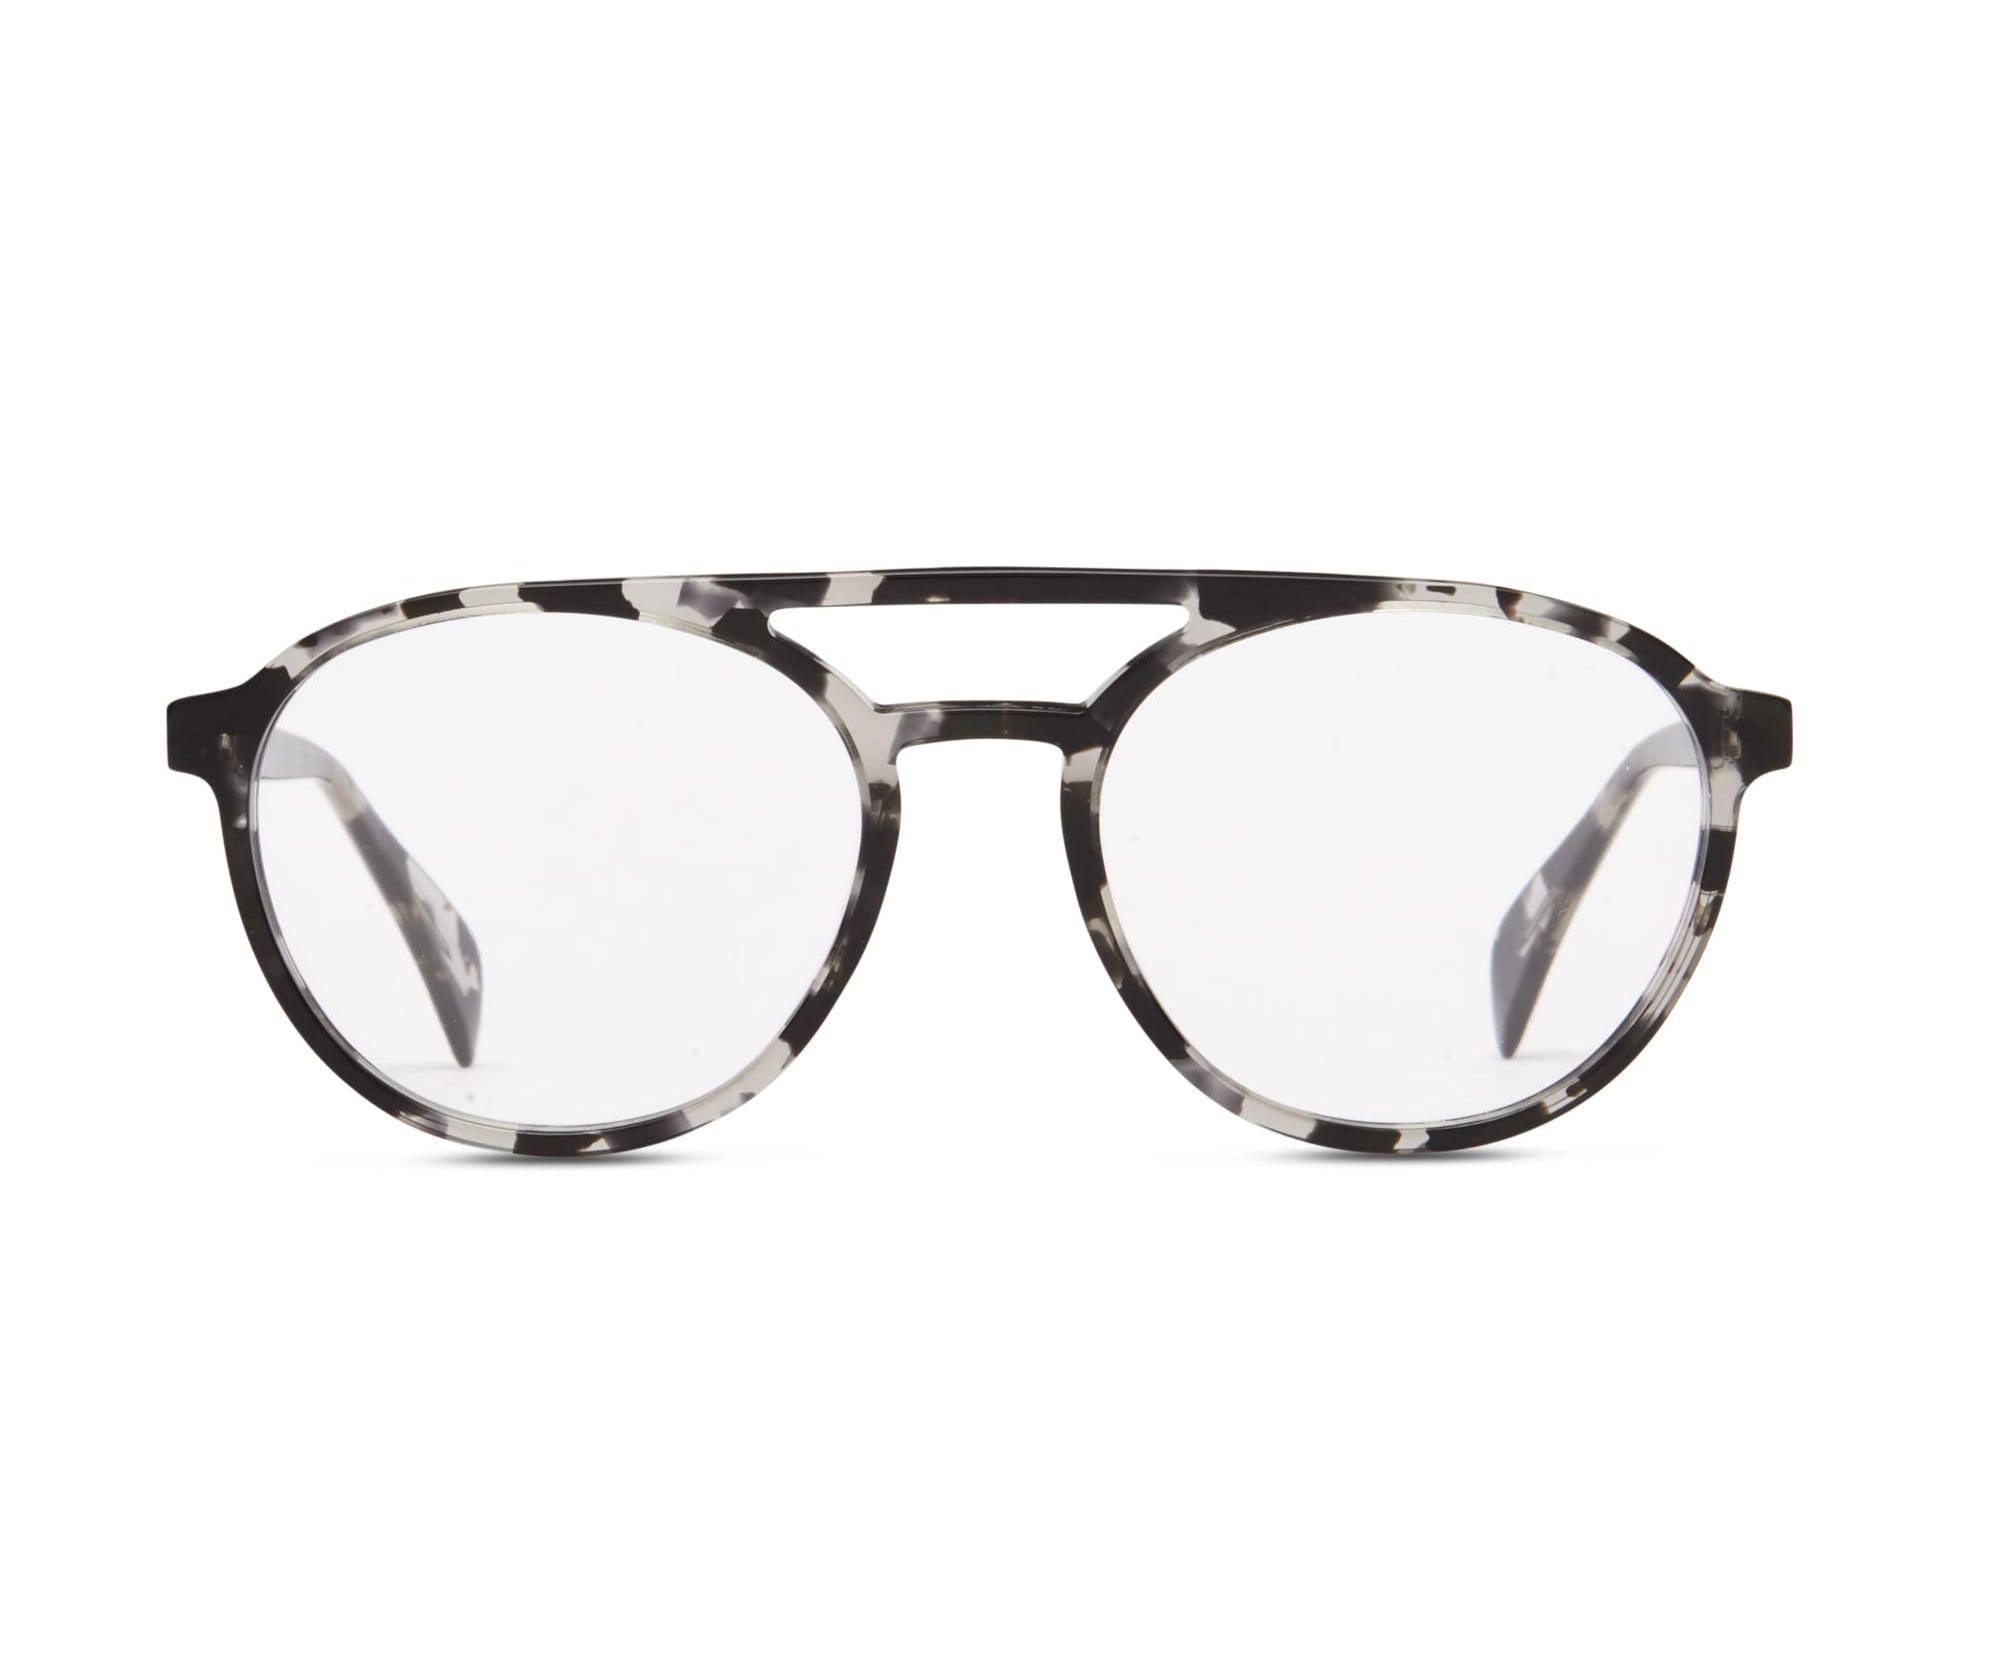 Moko Sunglasses with Black Tortoise acetate frame